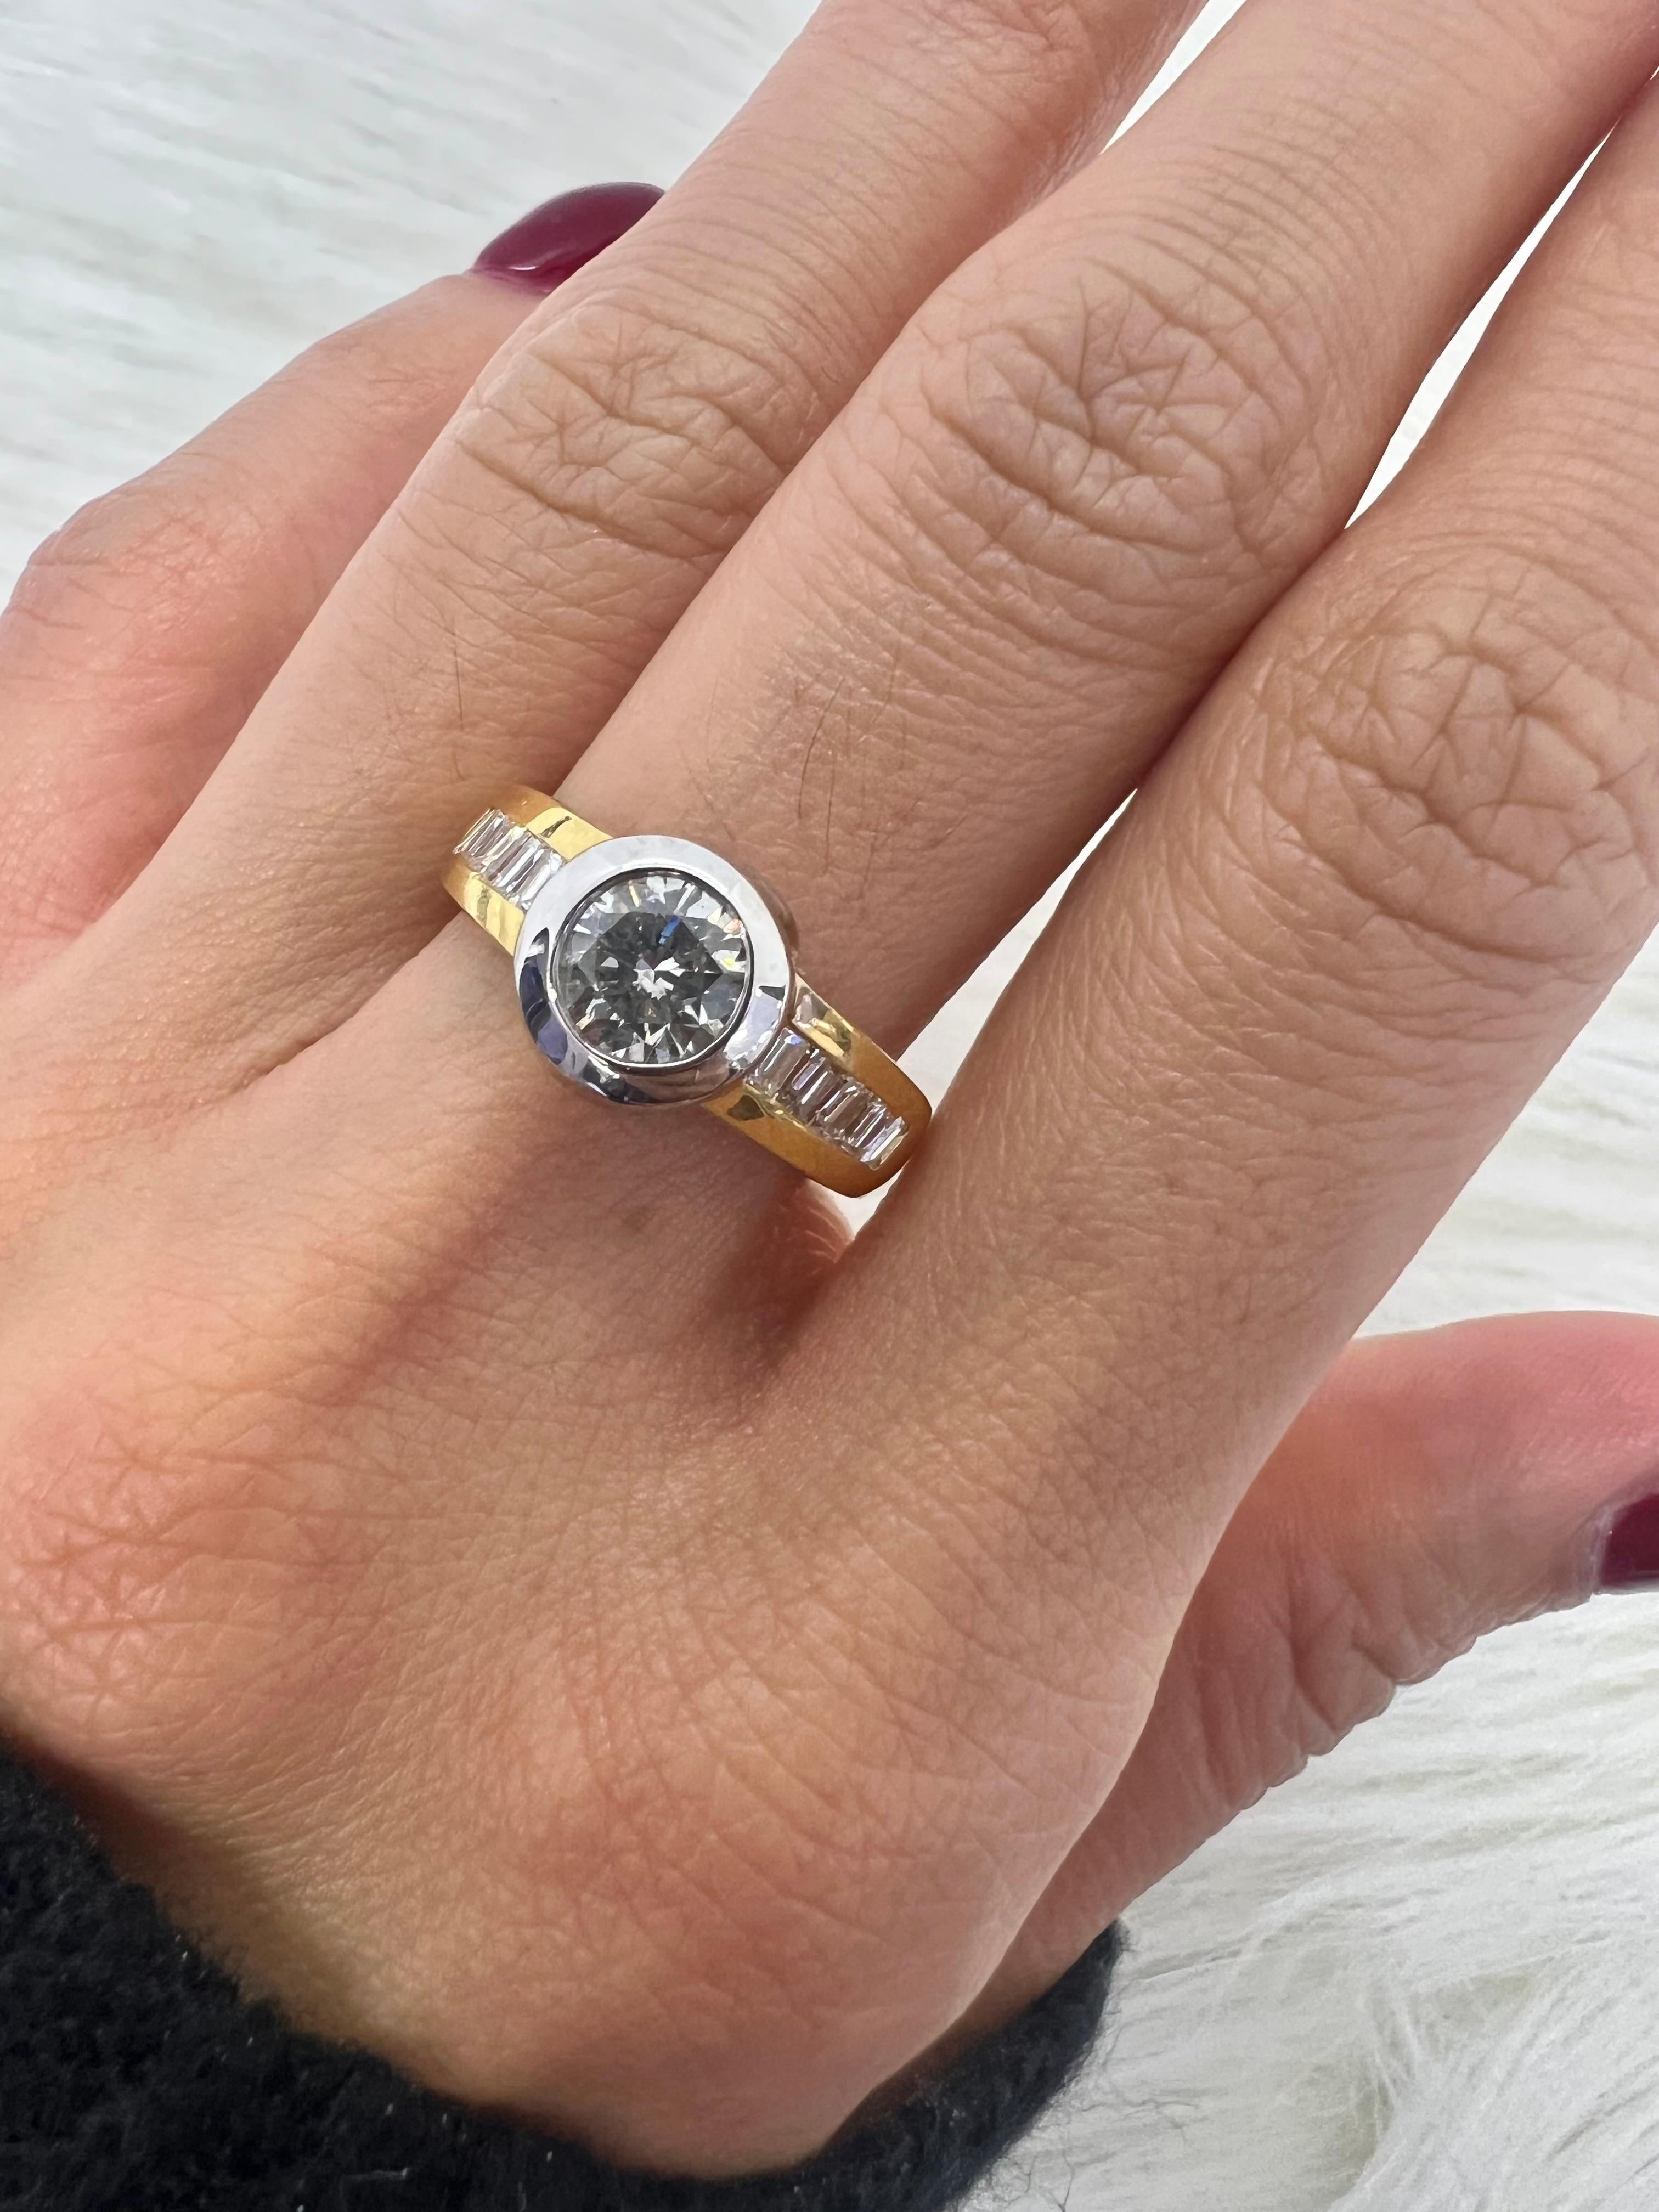 Round Cut Sophia D. 18K Yellow Gold Diamond Ring For Sale